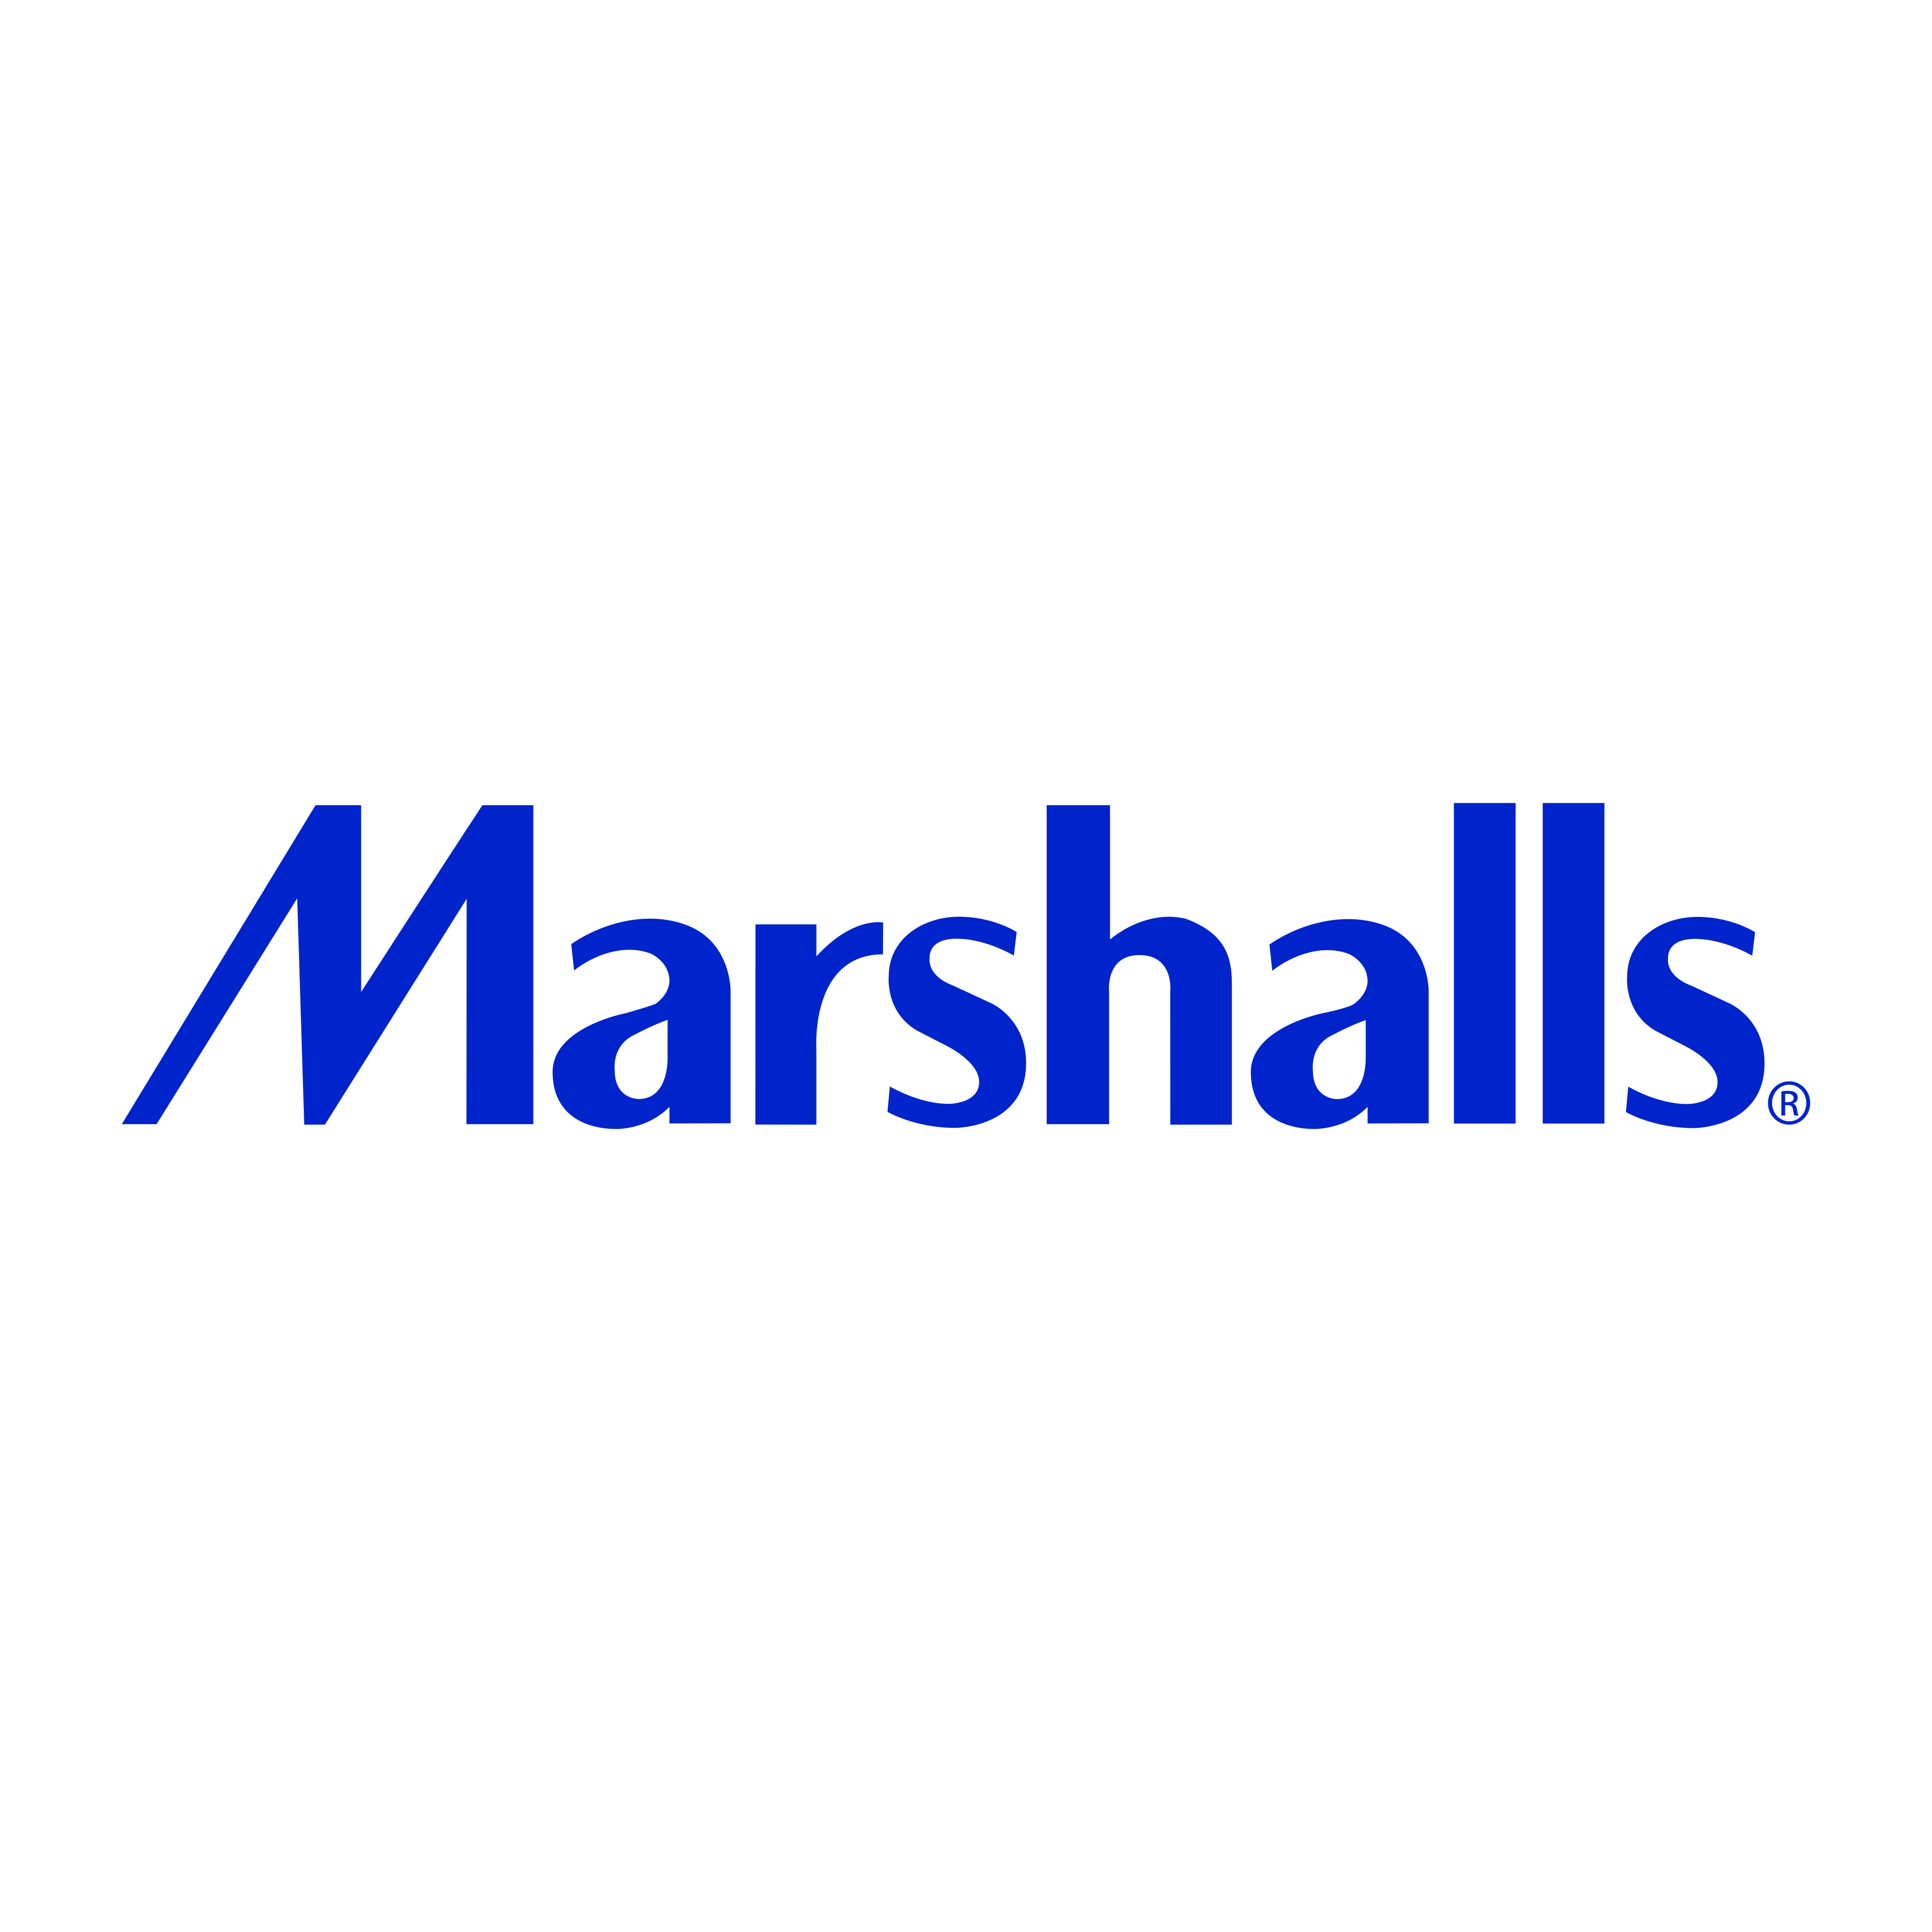 Marshalls Logo PNG.